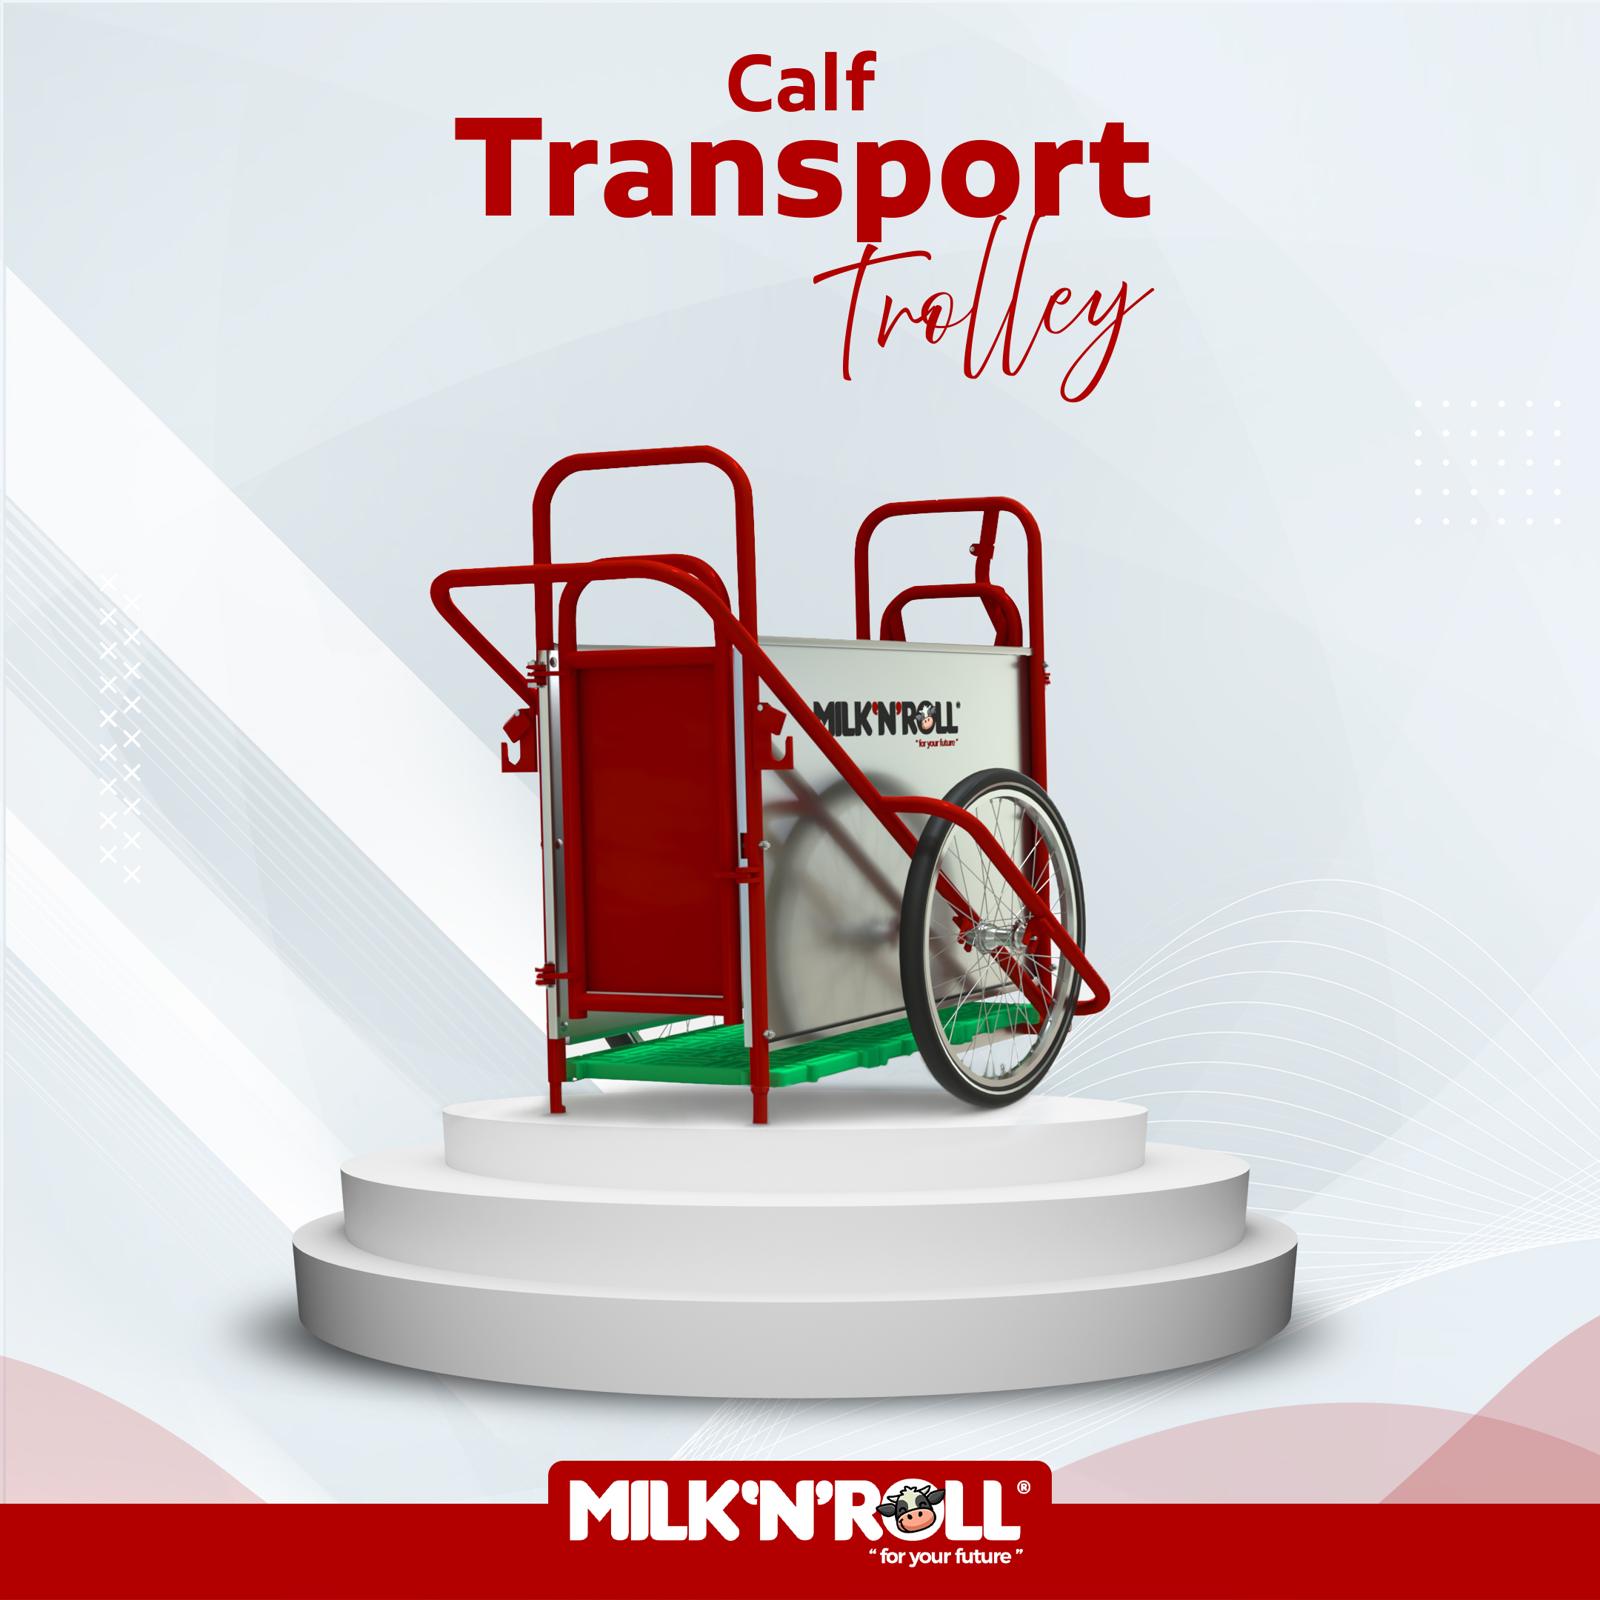 Calf Transport Trolley